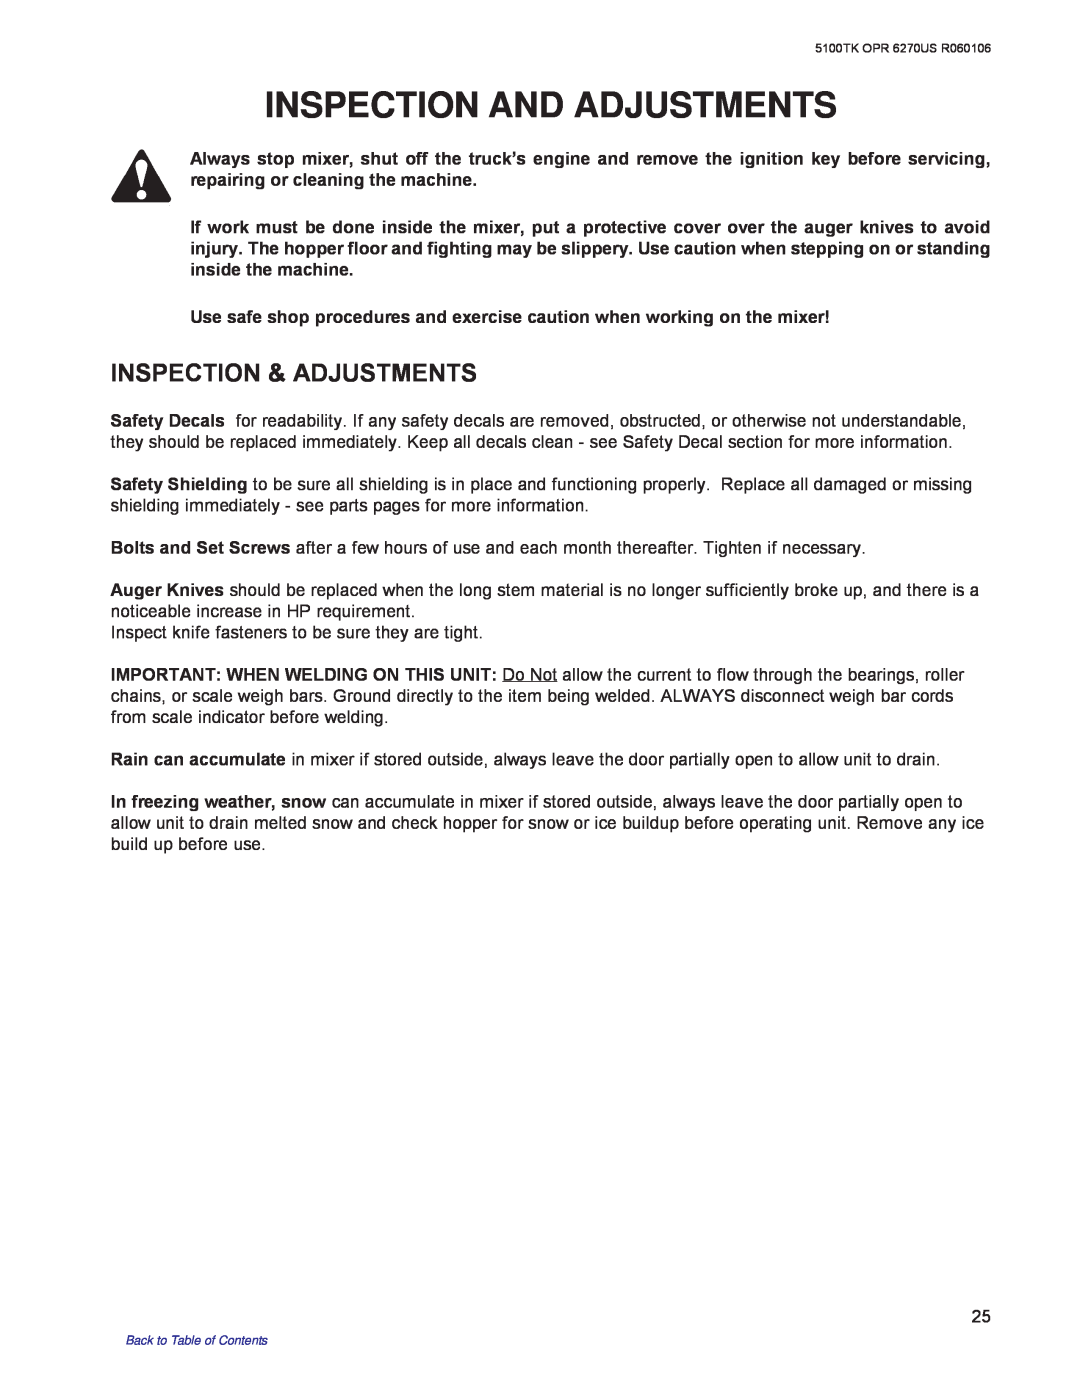 Kuhn Rikon 5100 instruction manual Inspection And Adjustments, Inspection & Adjustments 